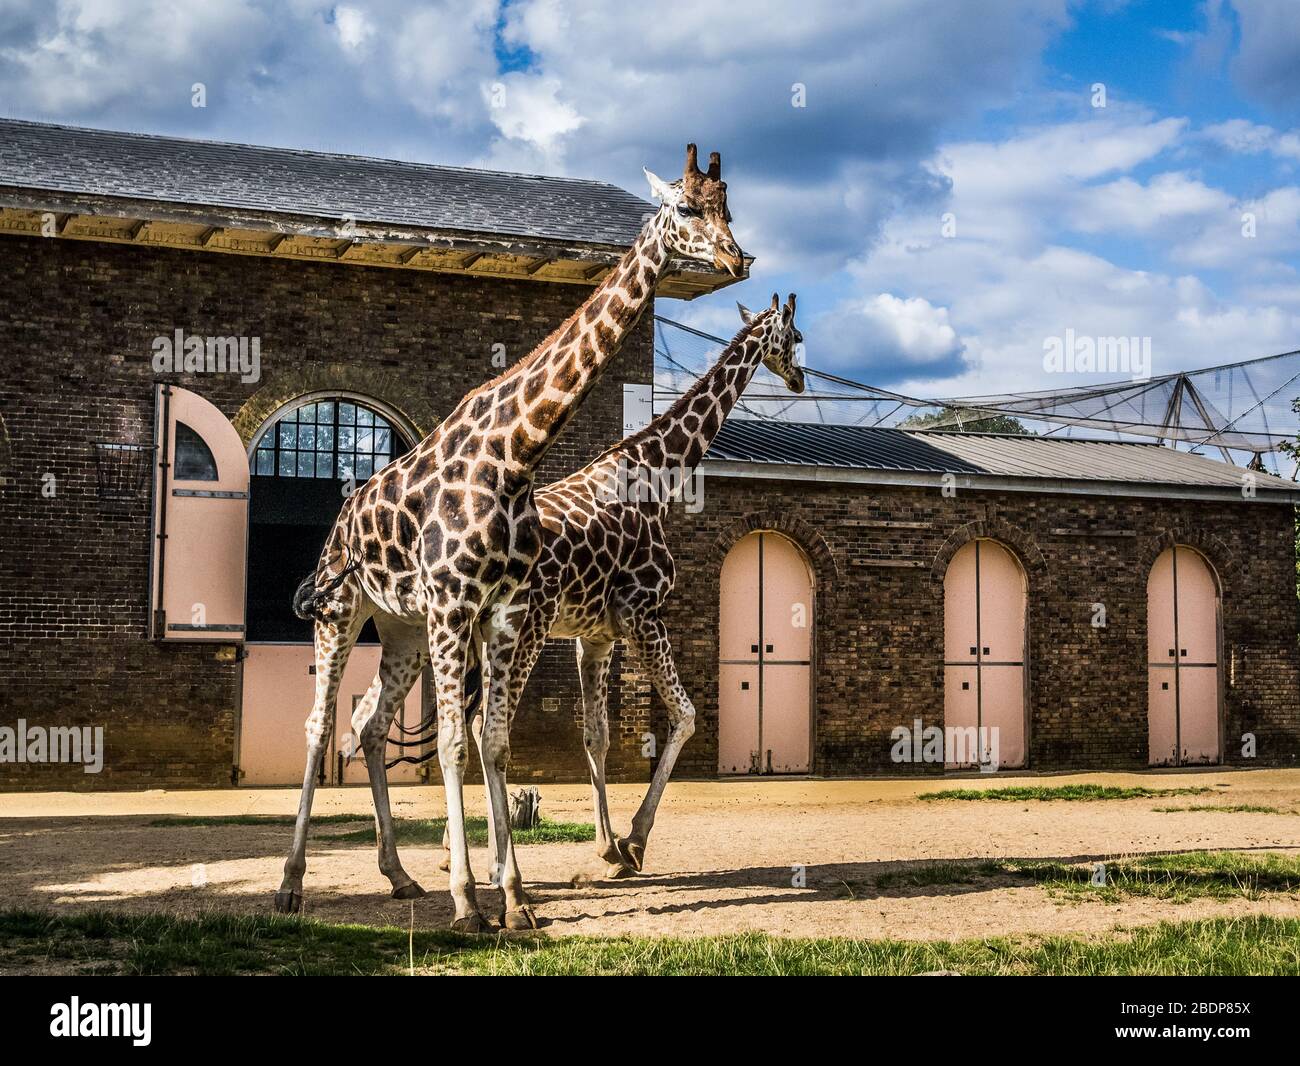 Giraffes at London Zoo Stock Photo